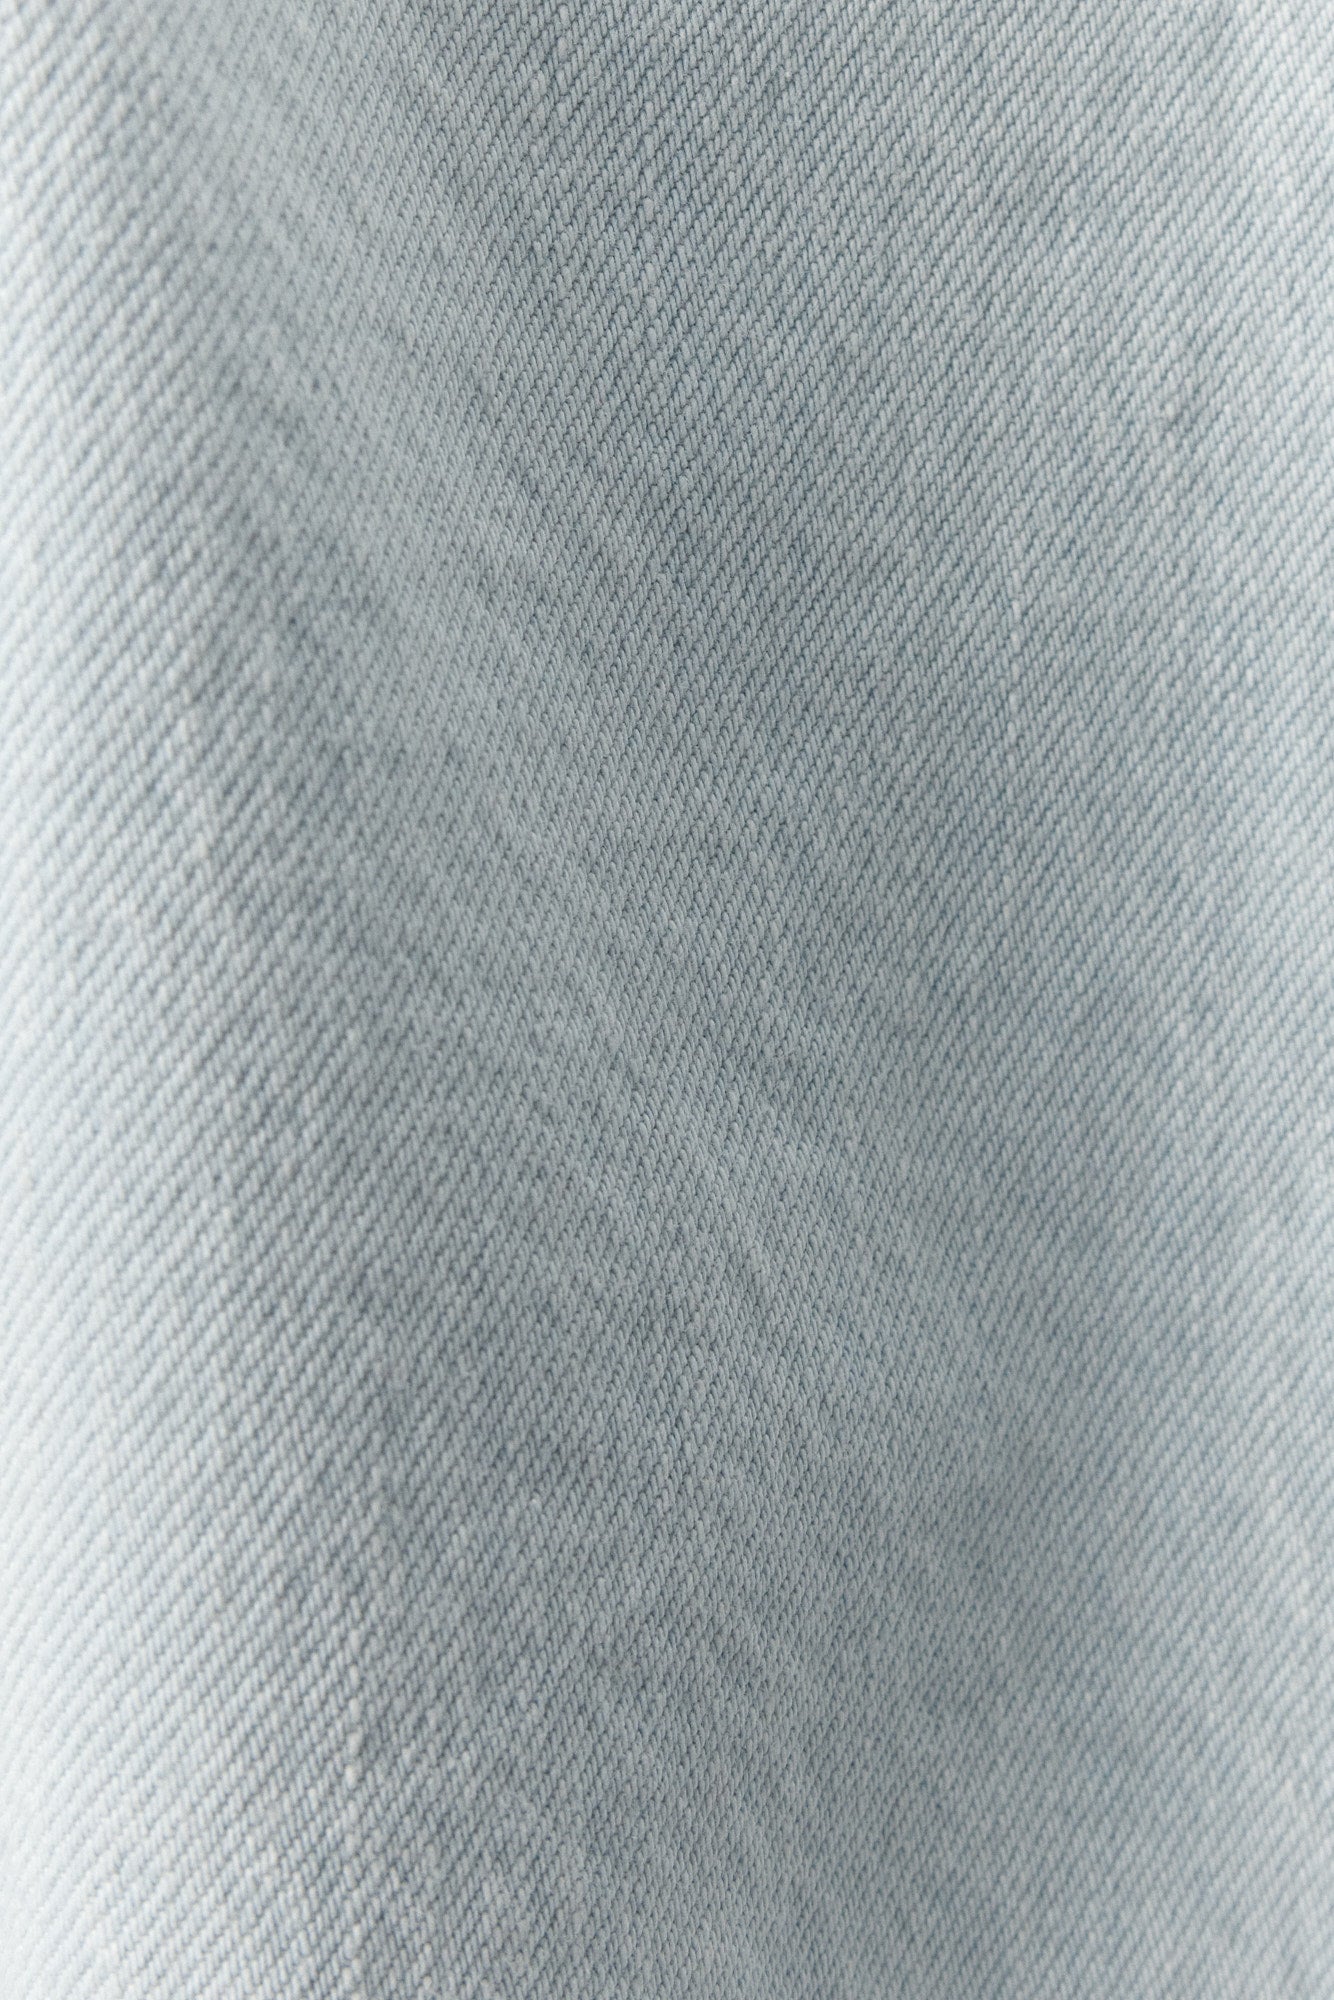 Pale blue denim overshirt | Mullins